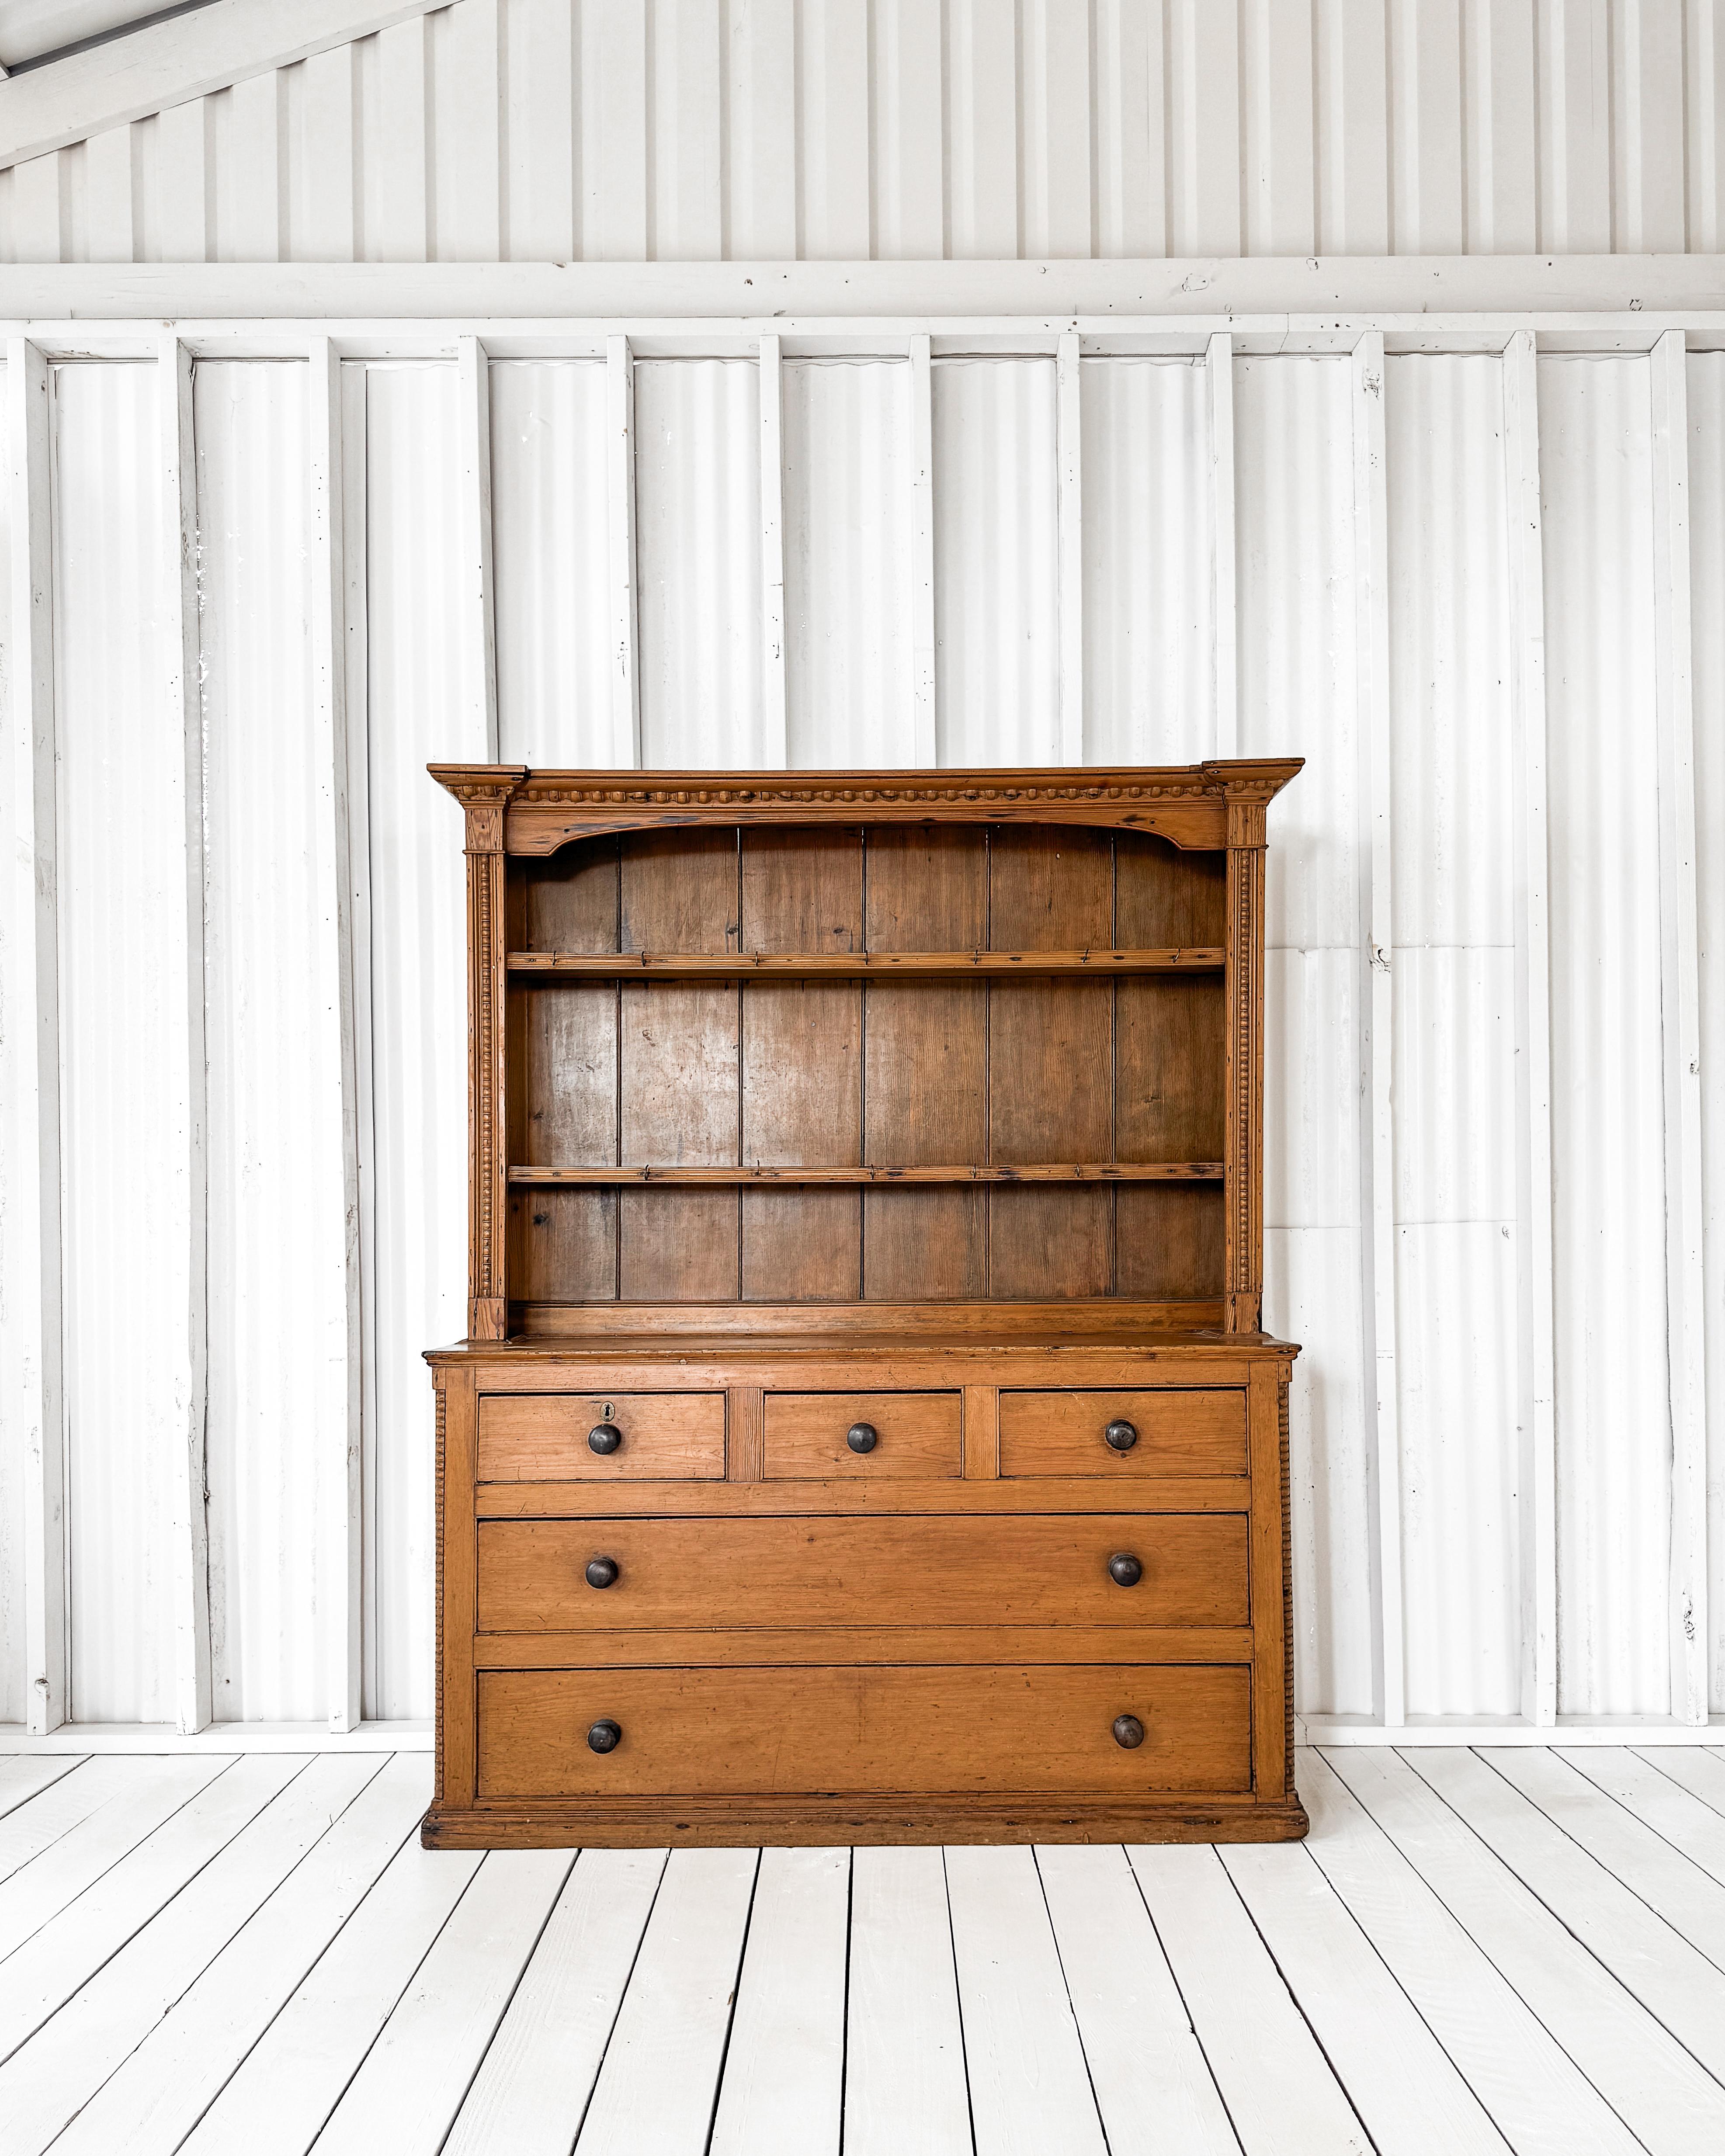 Irish 19th Century Pine Dresser with Plate Rack For Sale